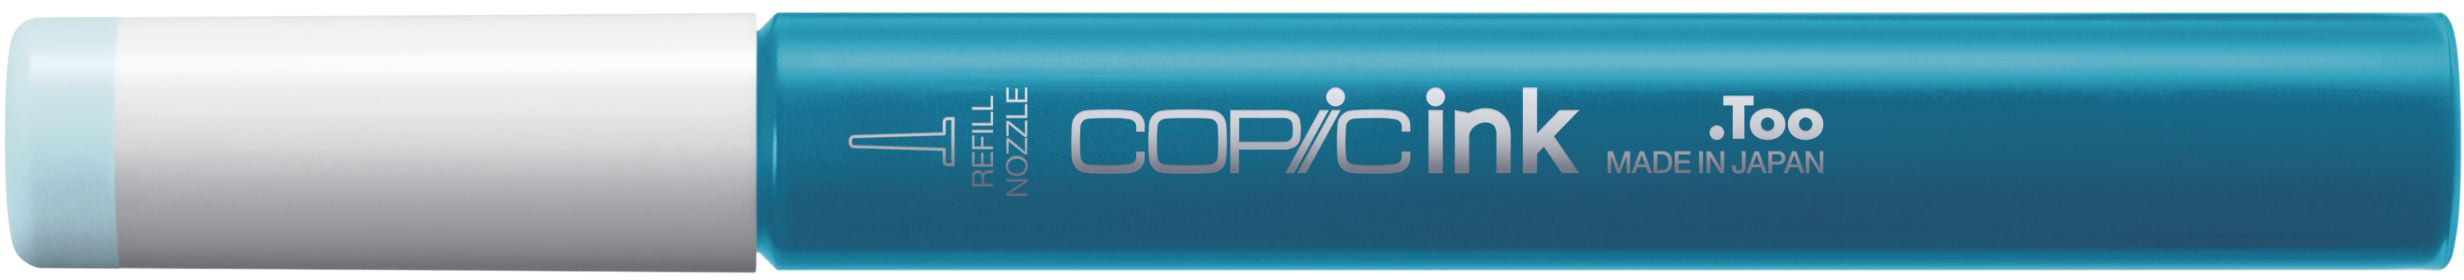 COPIC Ink Refill 21076313 BG000 - Pale Aqua